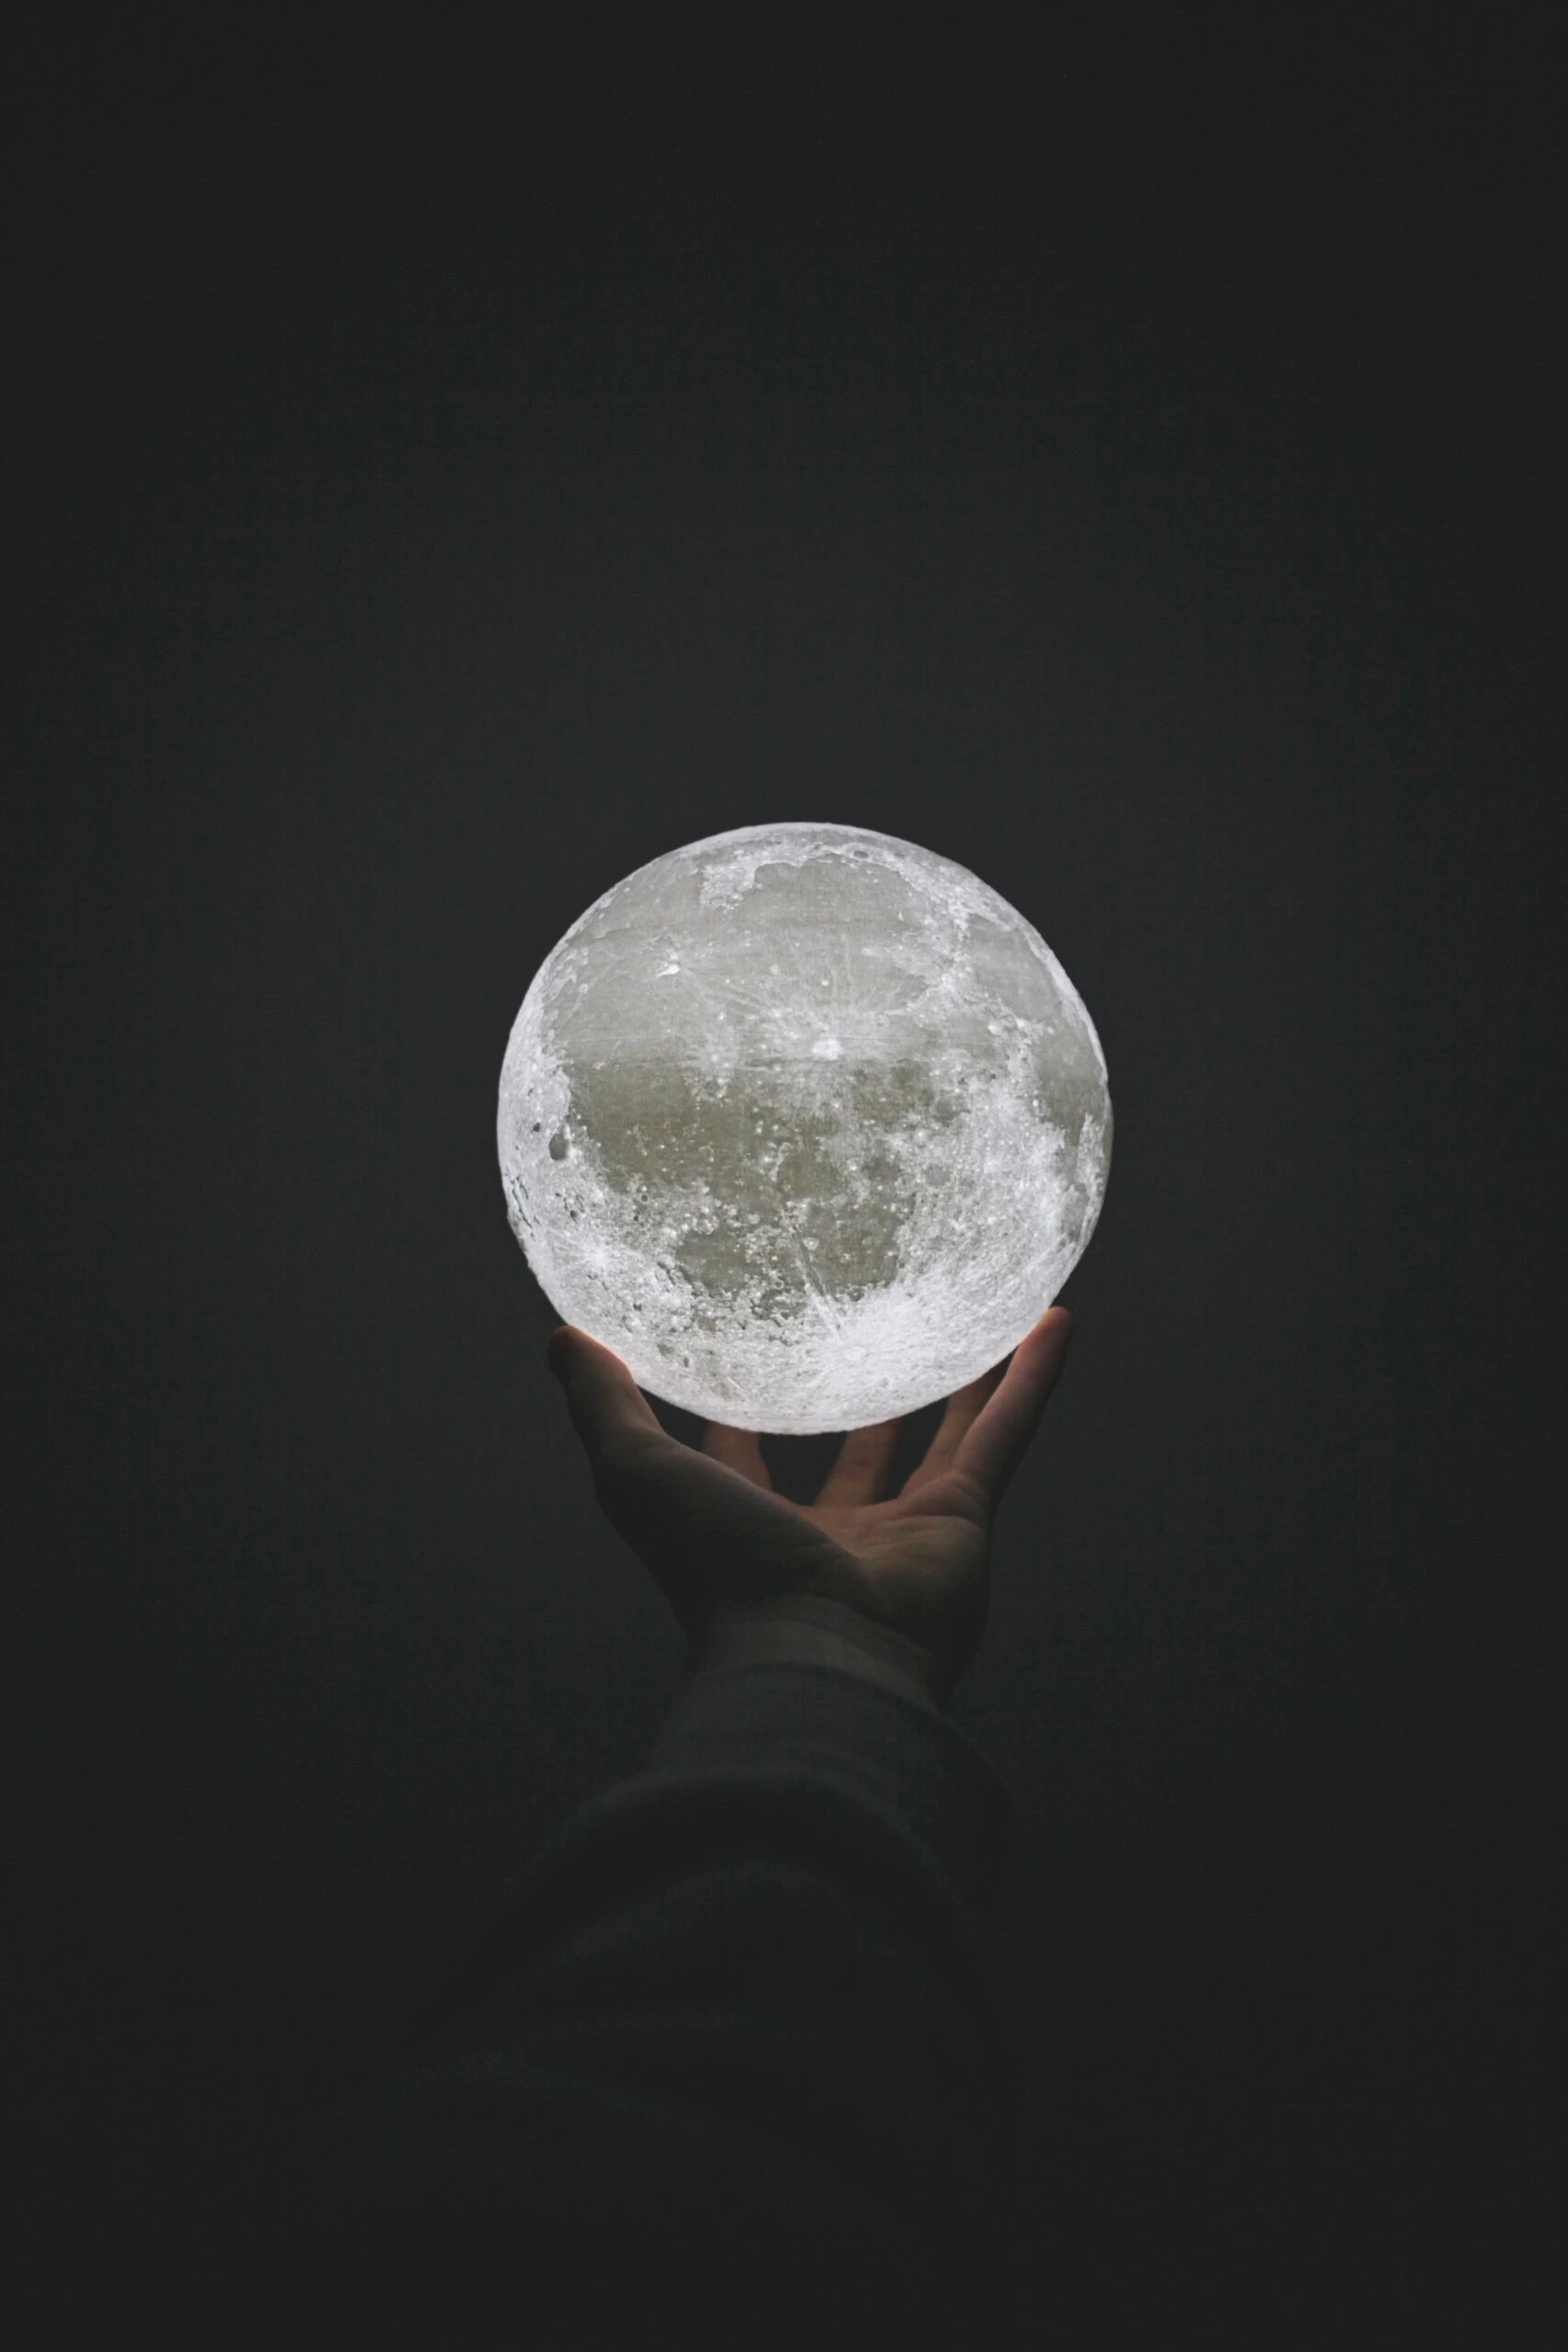 asper-benning-Moon in extended hand-unsplash-scaled